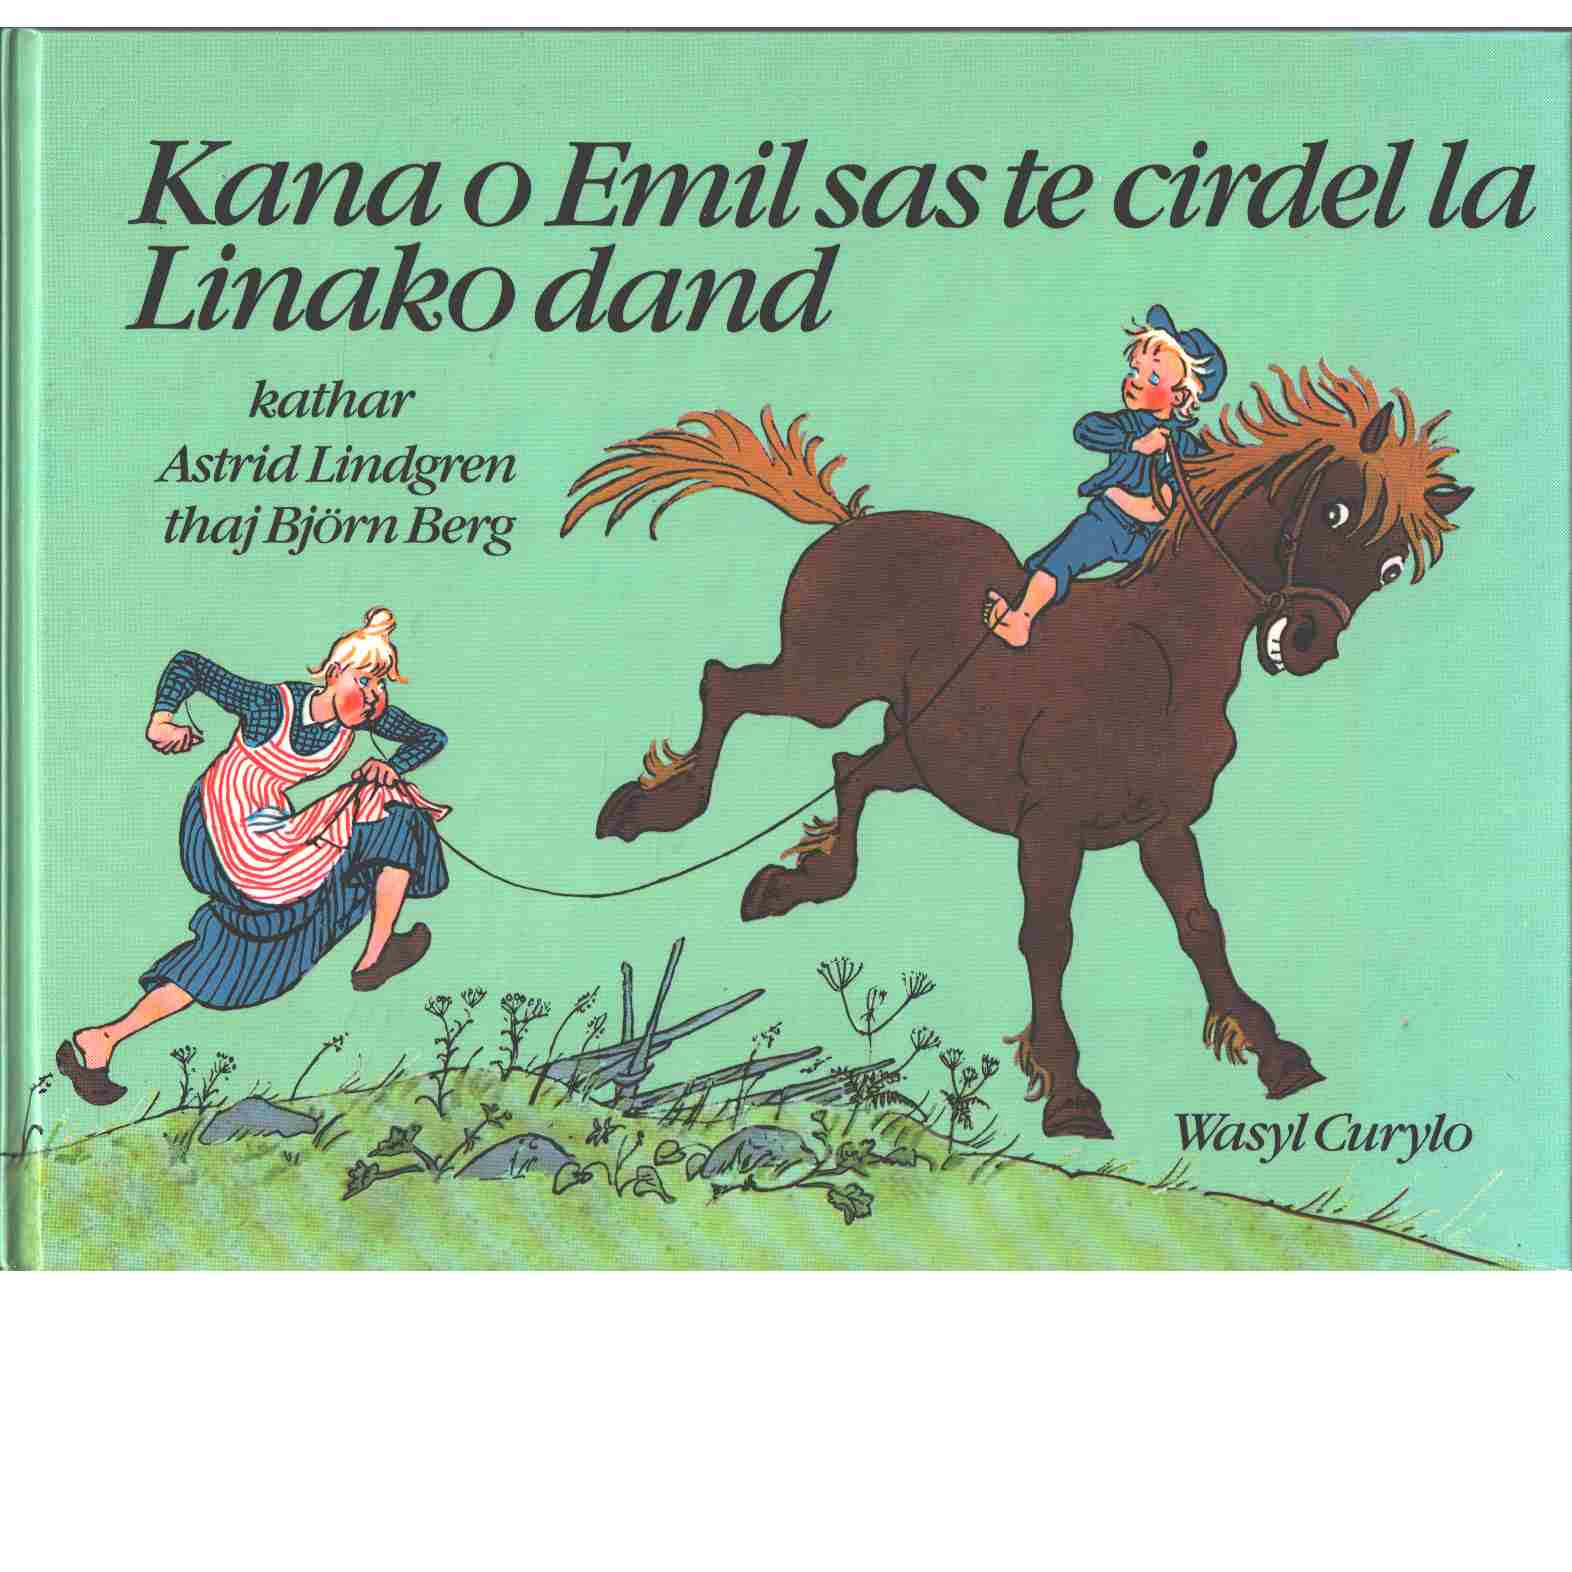 Kana o Emil sas te cirdel la Linako dand - Lindgren, Astrid